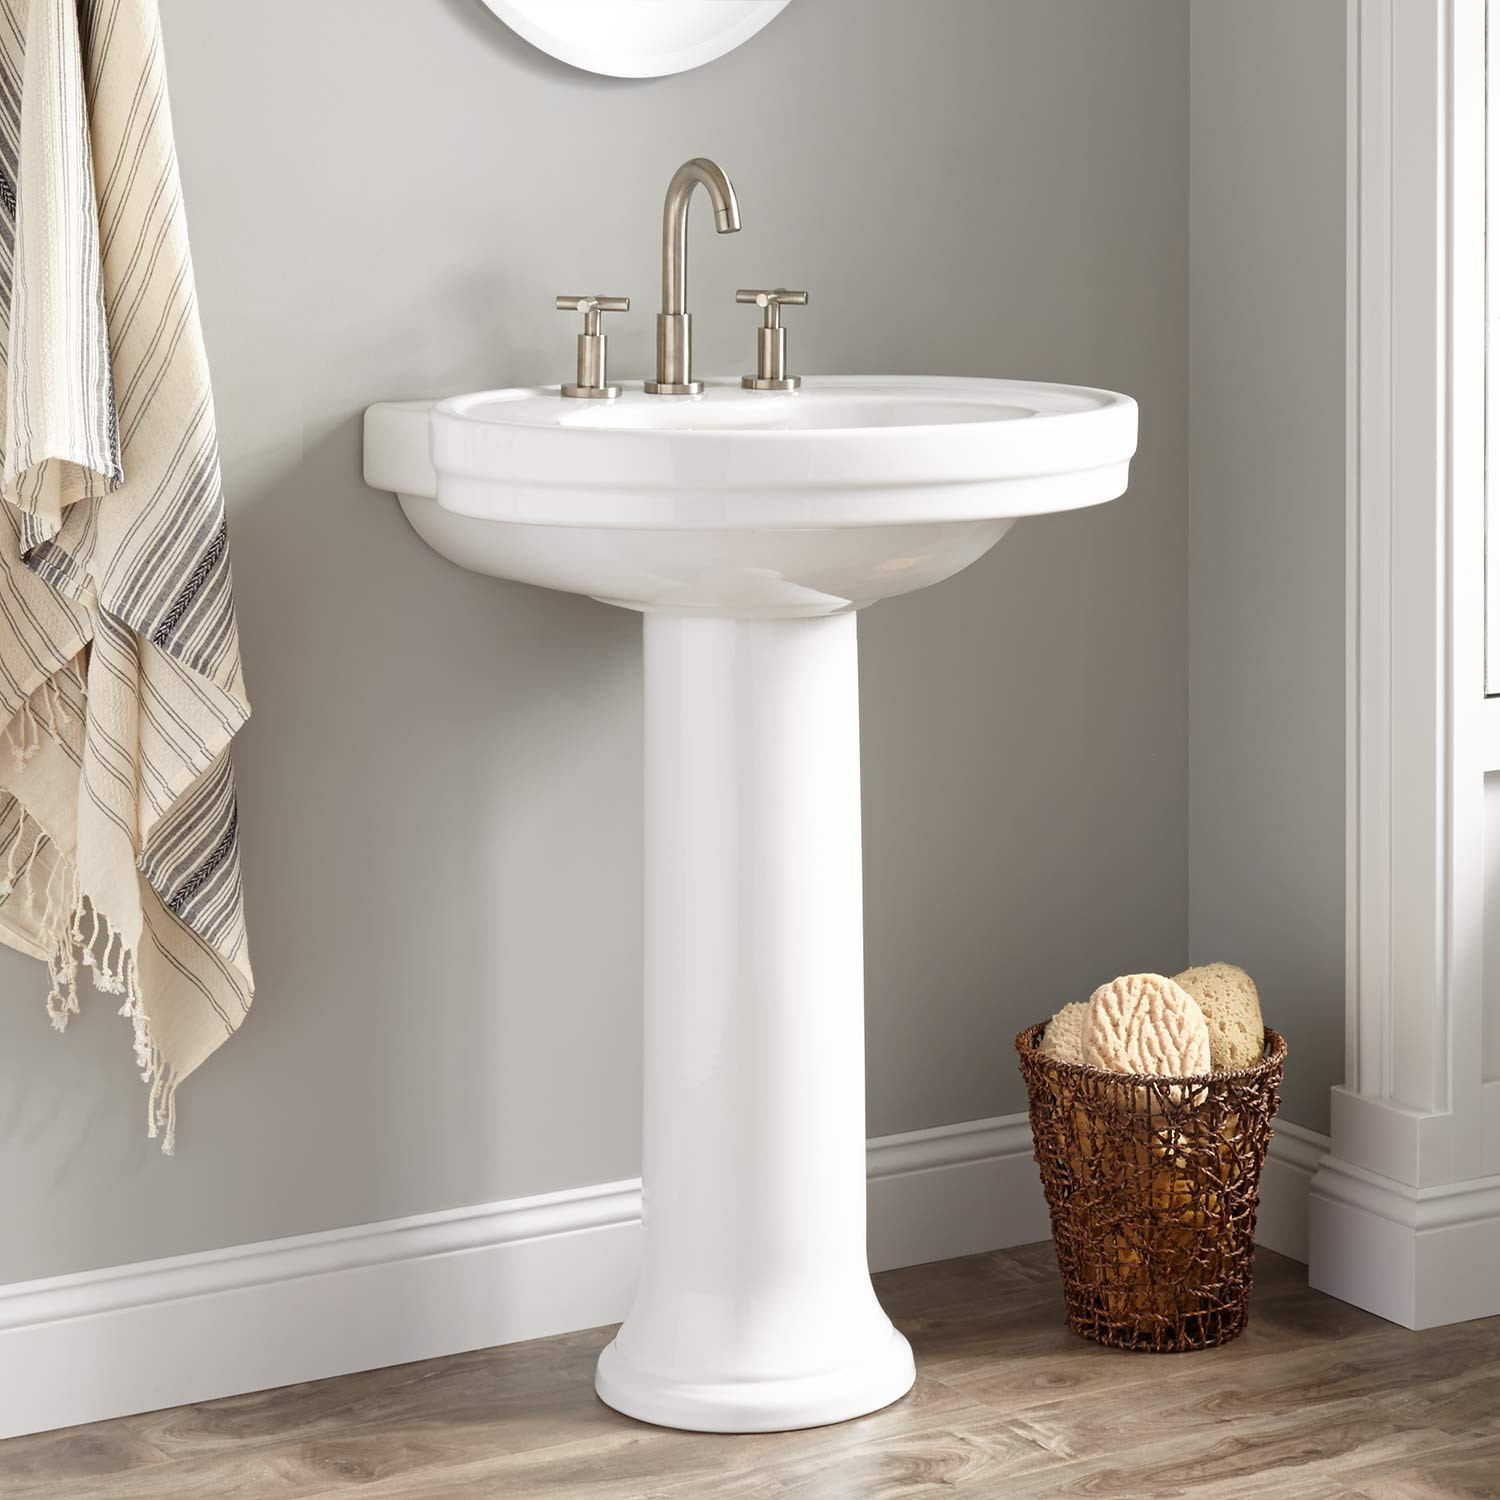 Best ideas about Pedestal Bathroom Sinks
. Save or Pin Cruzatte Porcelain Pedestal Sink Pedestal Sinks Now.